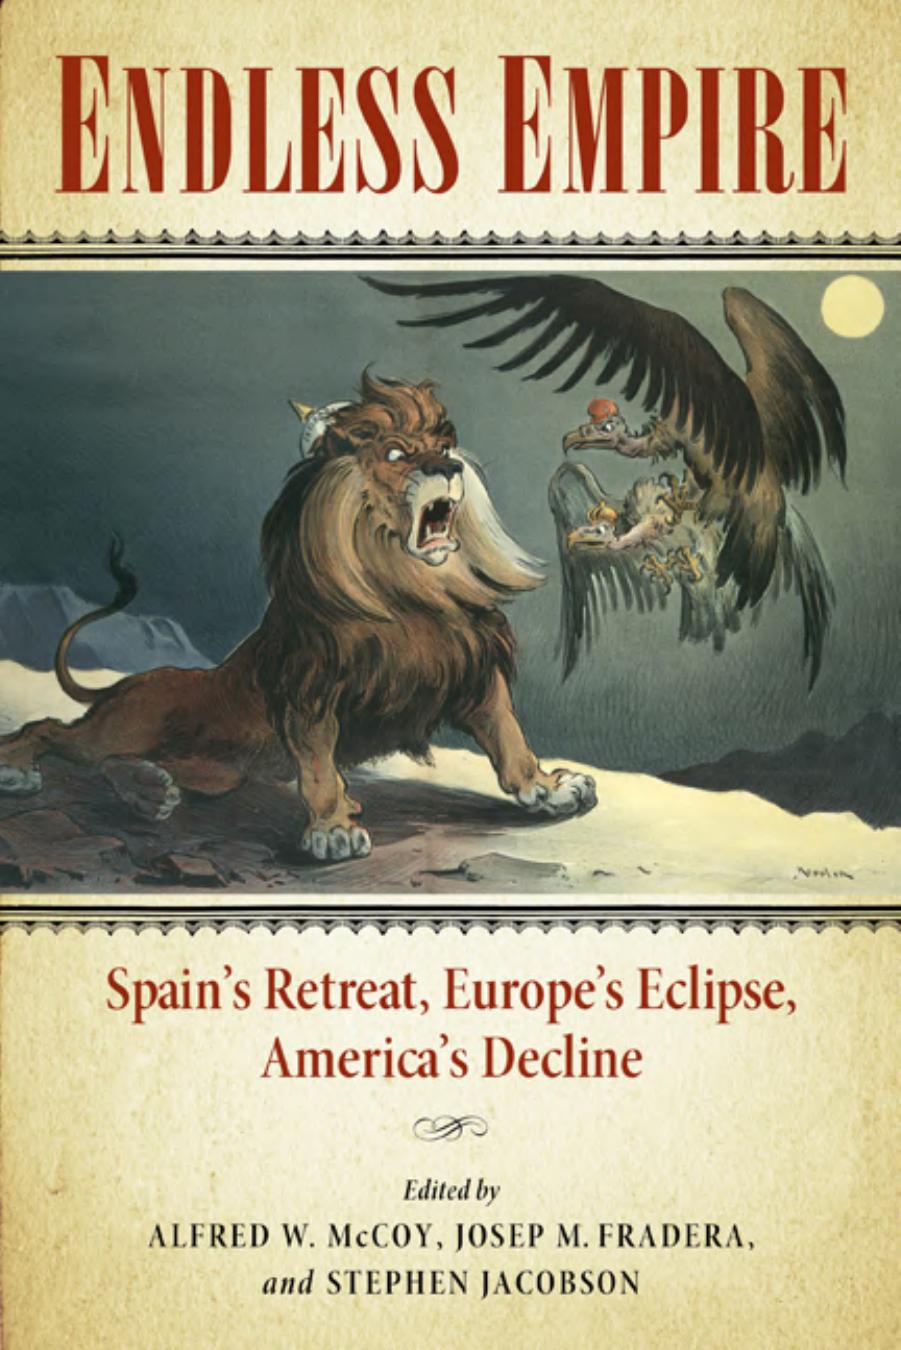 Endless Empire: Spain's Retreat, Europe's Eclipse, America's Decline